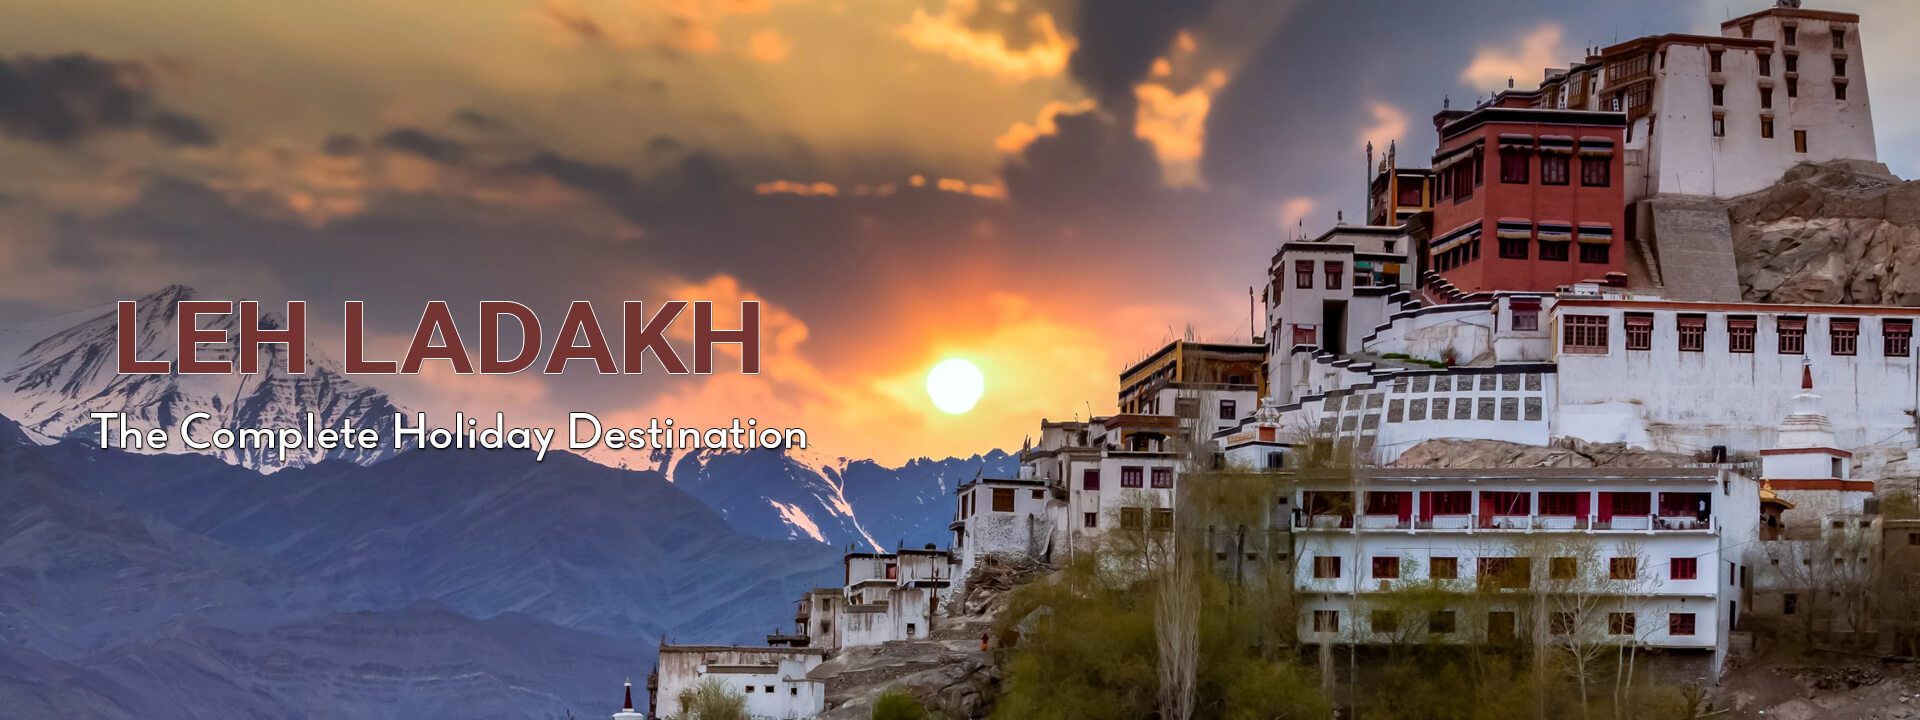 ladakh-banner